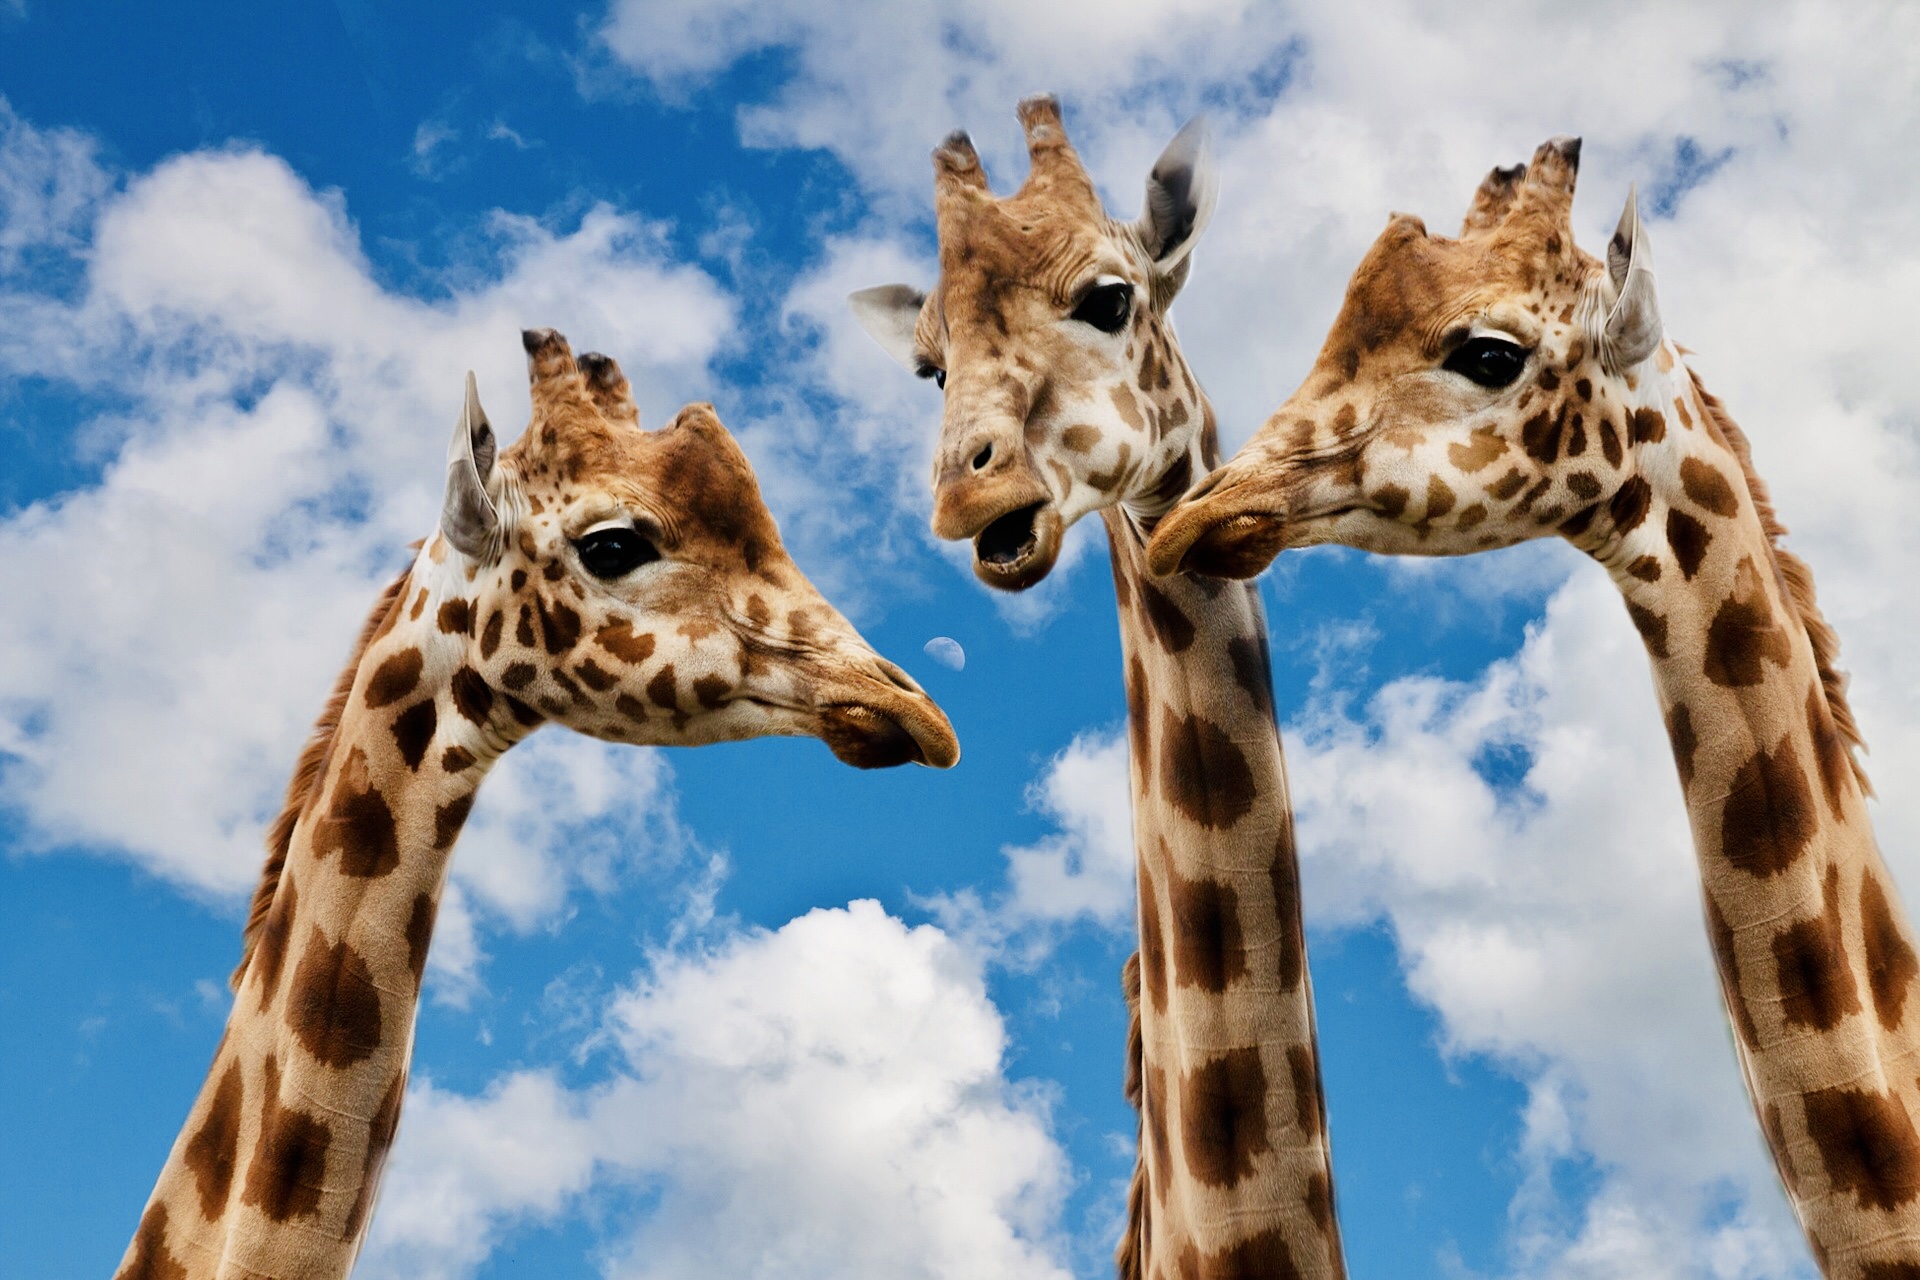 3 talking giraffes